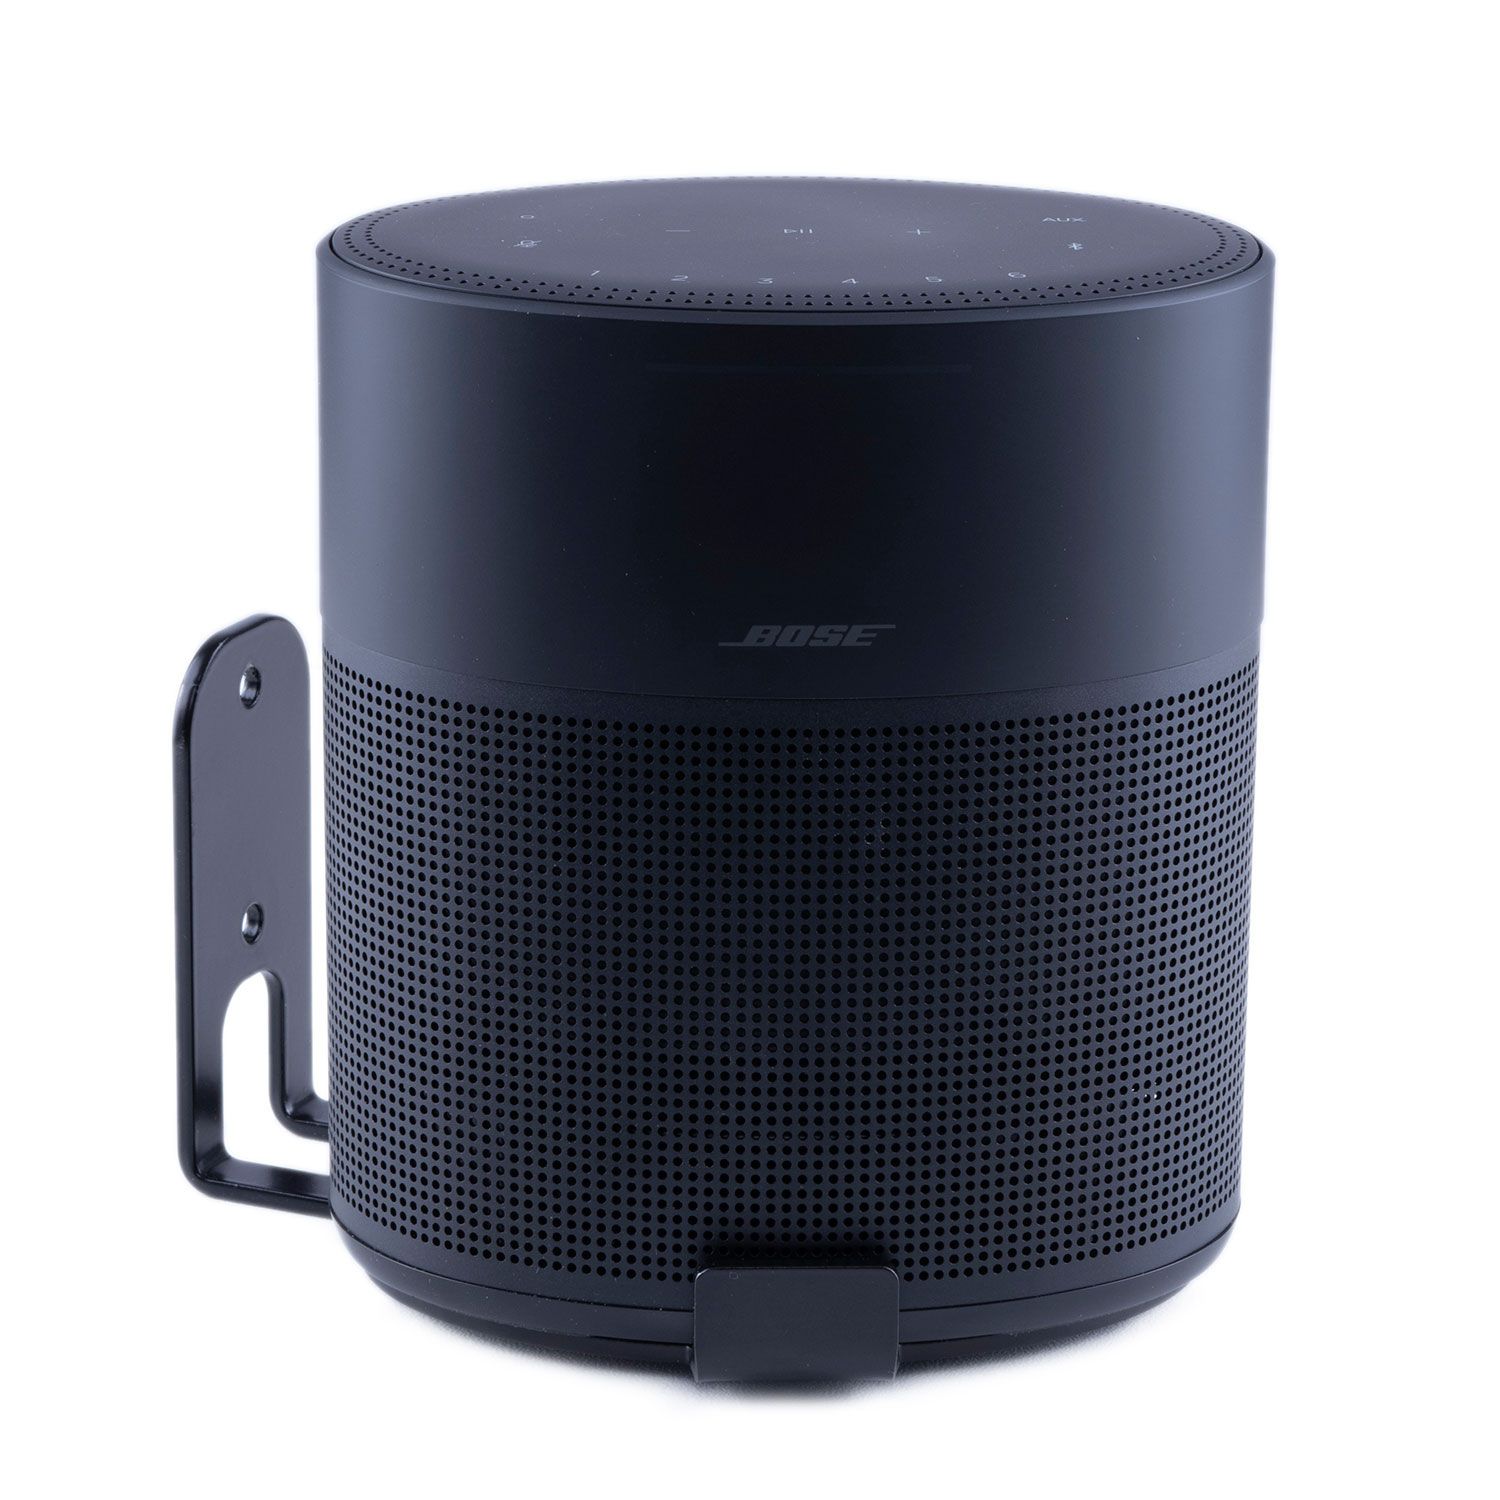 Spuug uit Alvast erfgoed Muurbeugel Bose Home Speaker 300 zwart van Vebos, hang je Bose op